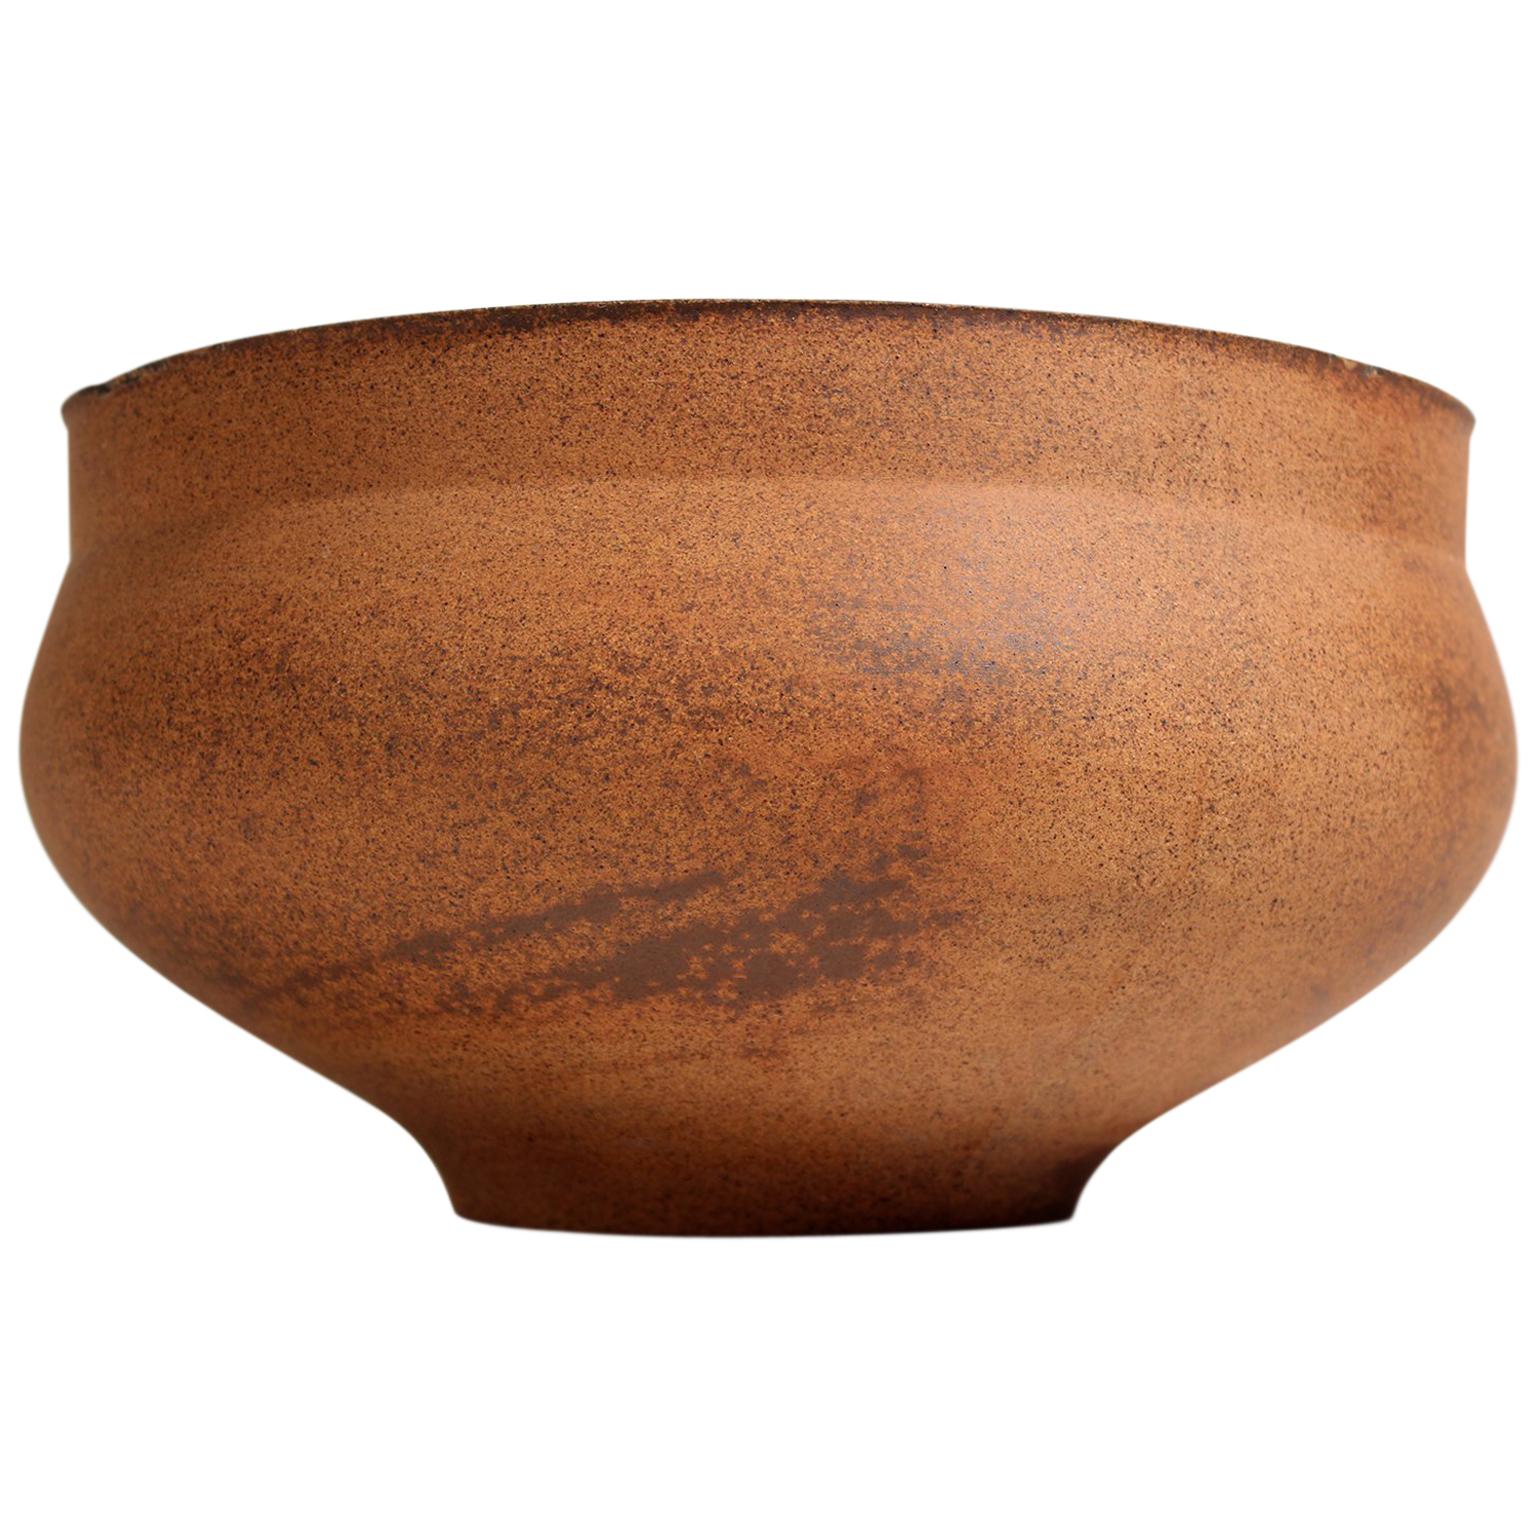 David Cressey Pro Artisan Architectural Pottery Planter Vessel Pot